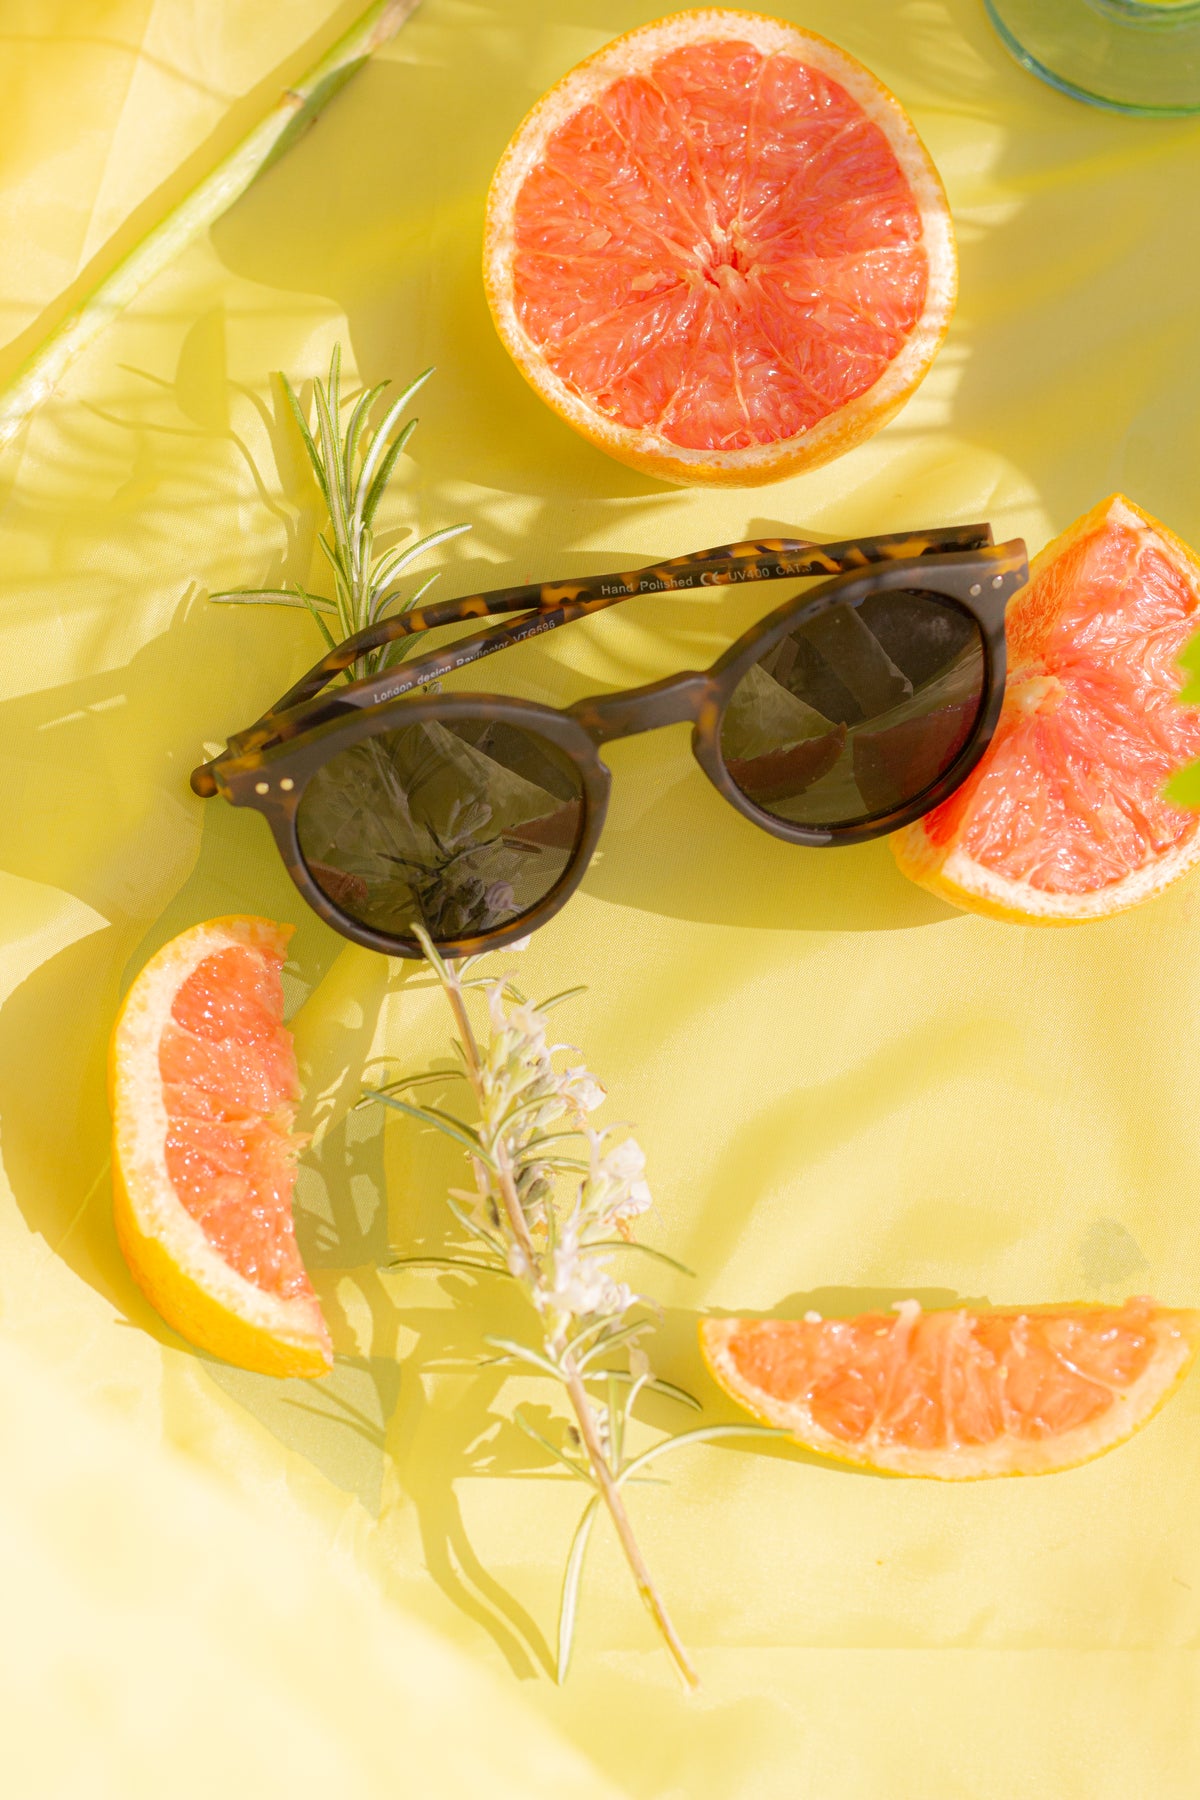 Classic Round Keyhole Sunglasses - Sugar + Style